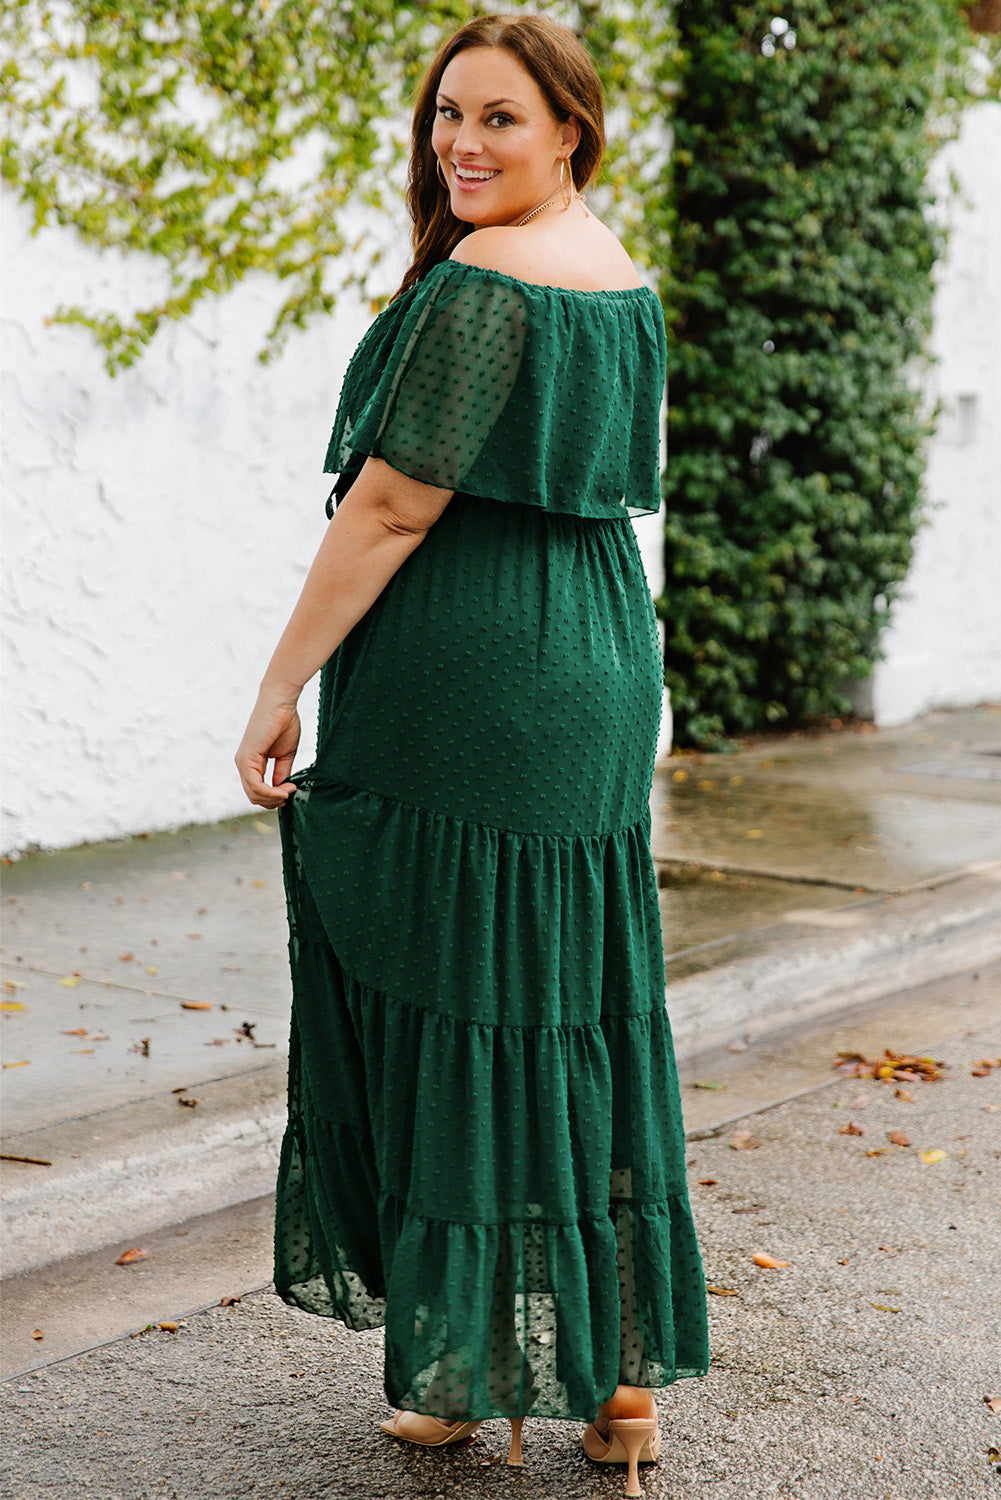 Swiss Dot Off-Shoulder Summer Maxi Dress in Hunter Green or Wedding White - Plus Size